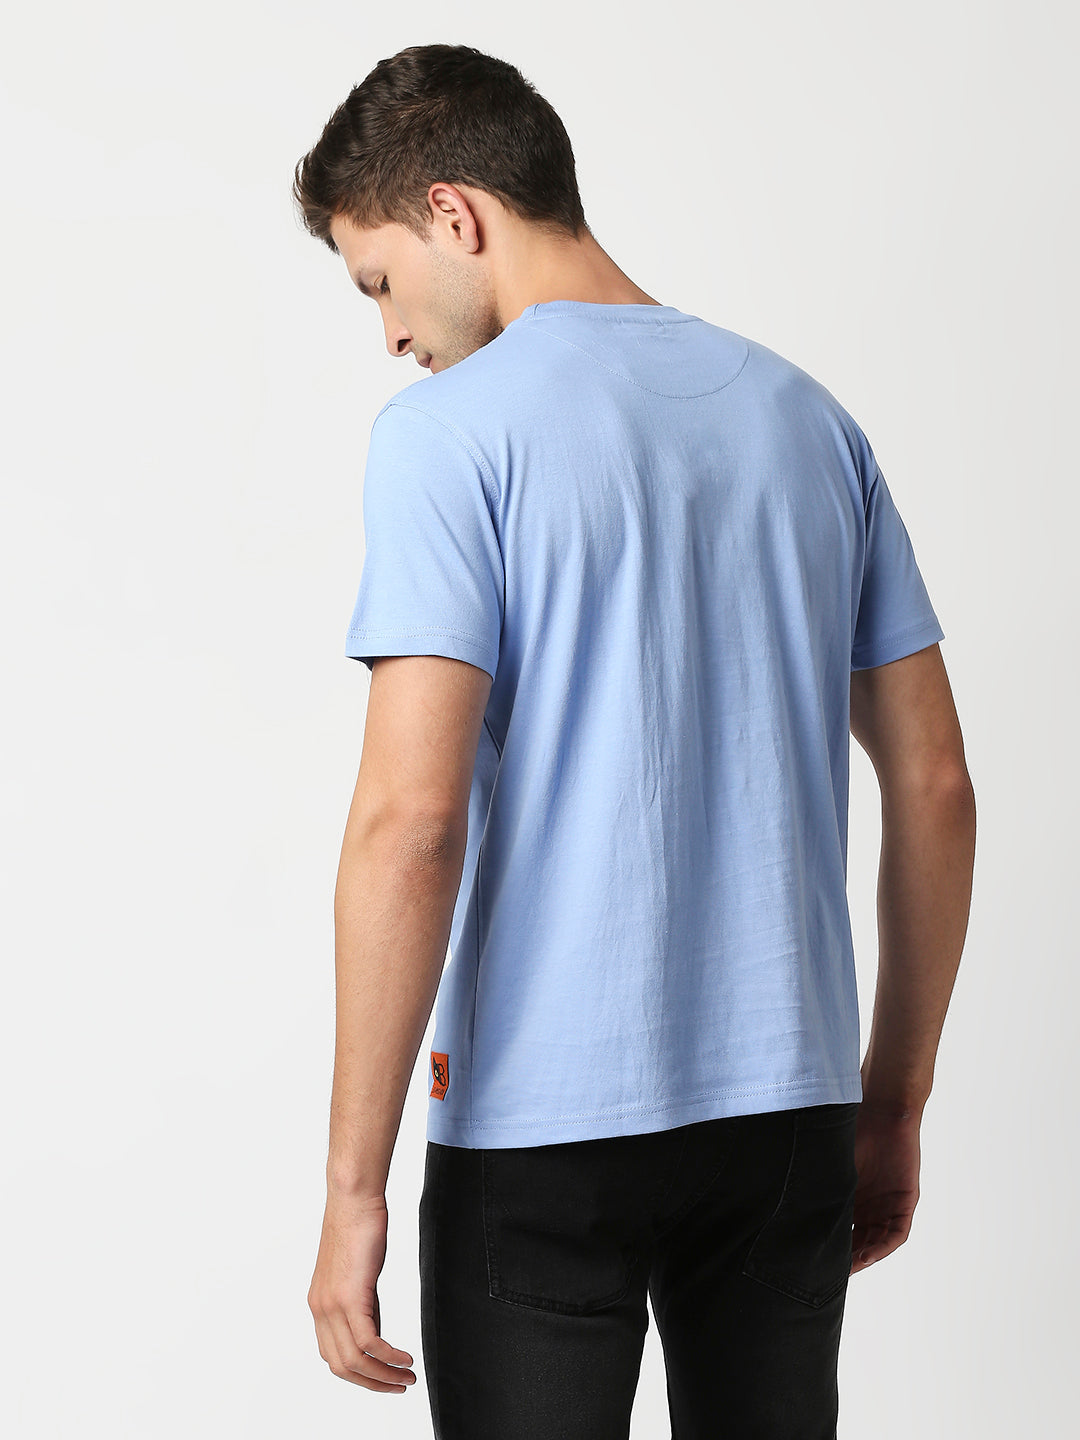 Buy Blamblack Men's Powder Blue Color Plain T Shirt